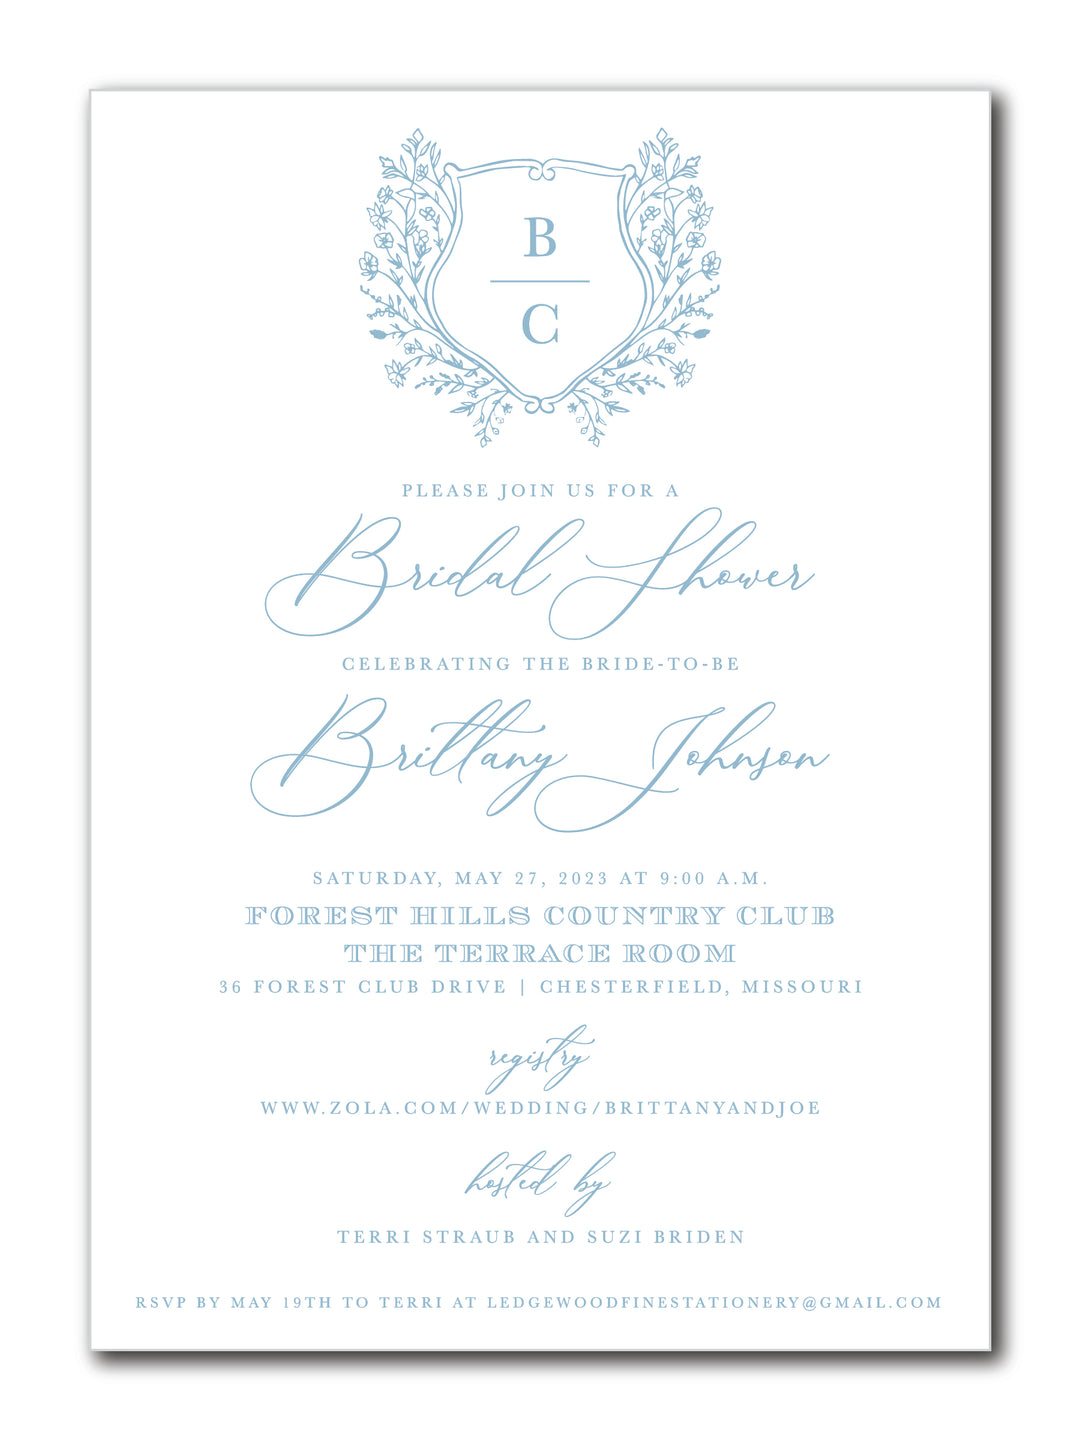 The Brittany Bridal Shower Invitation